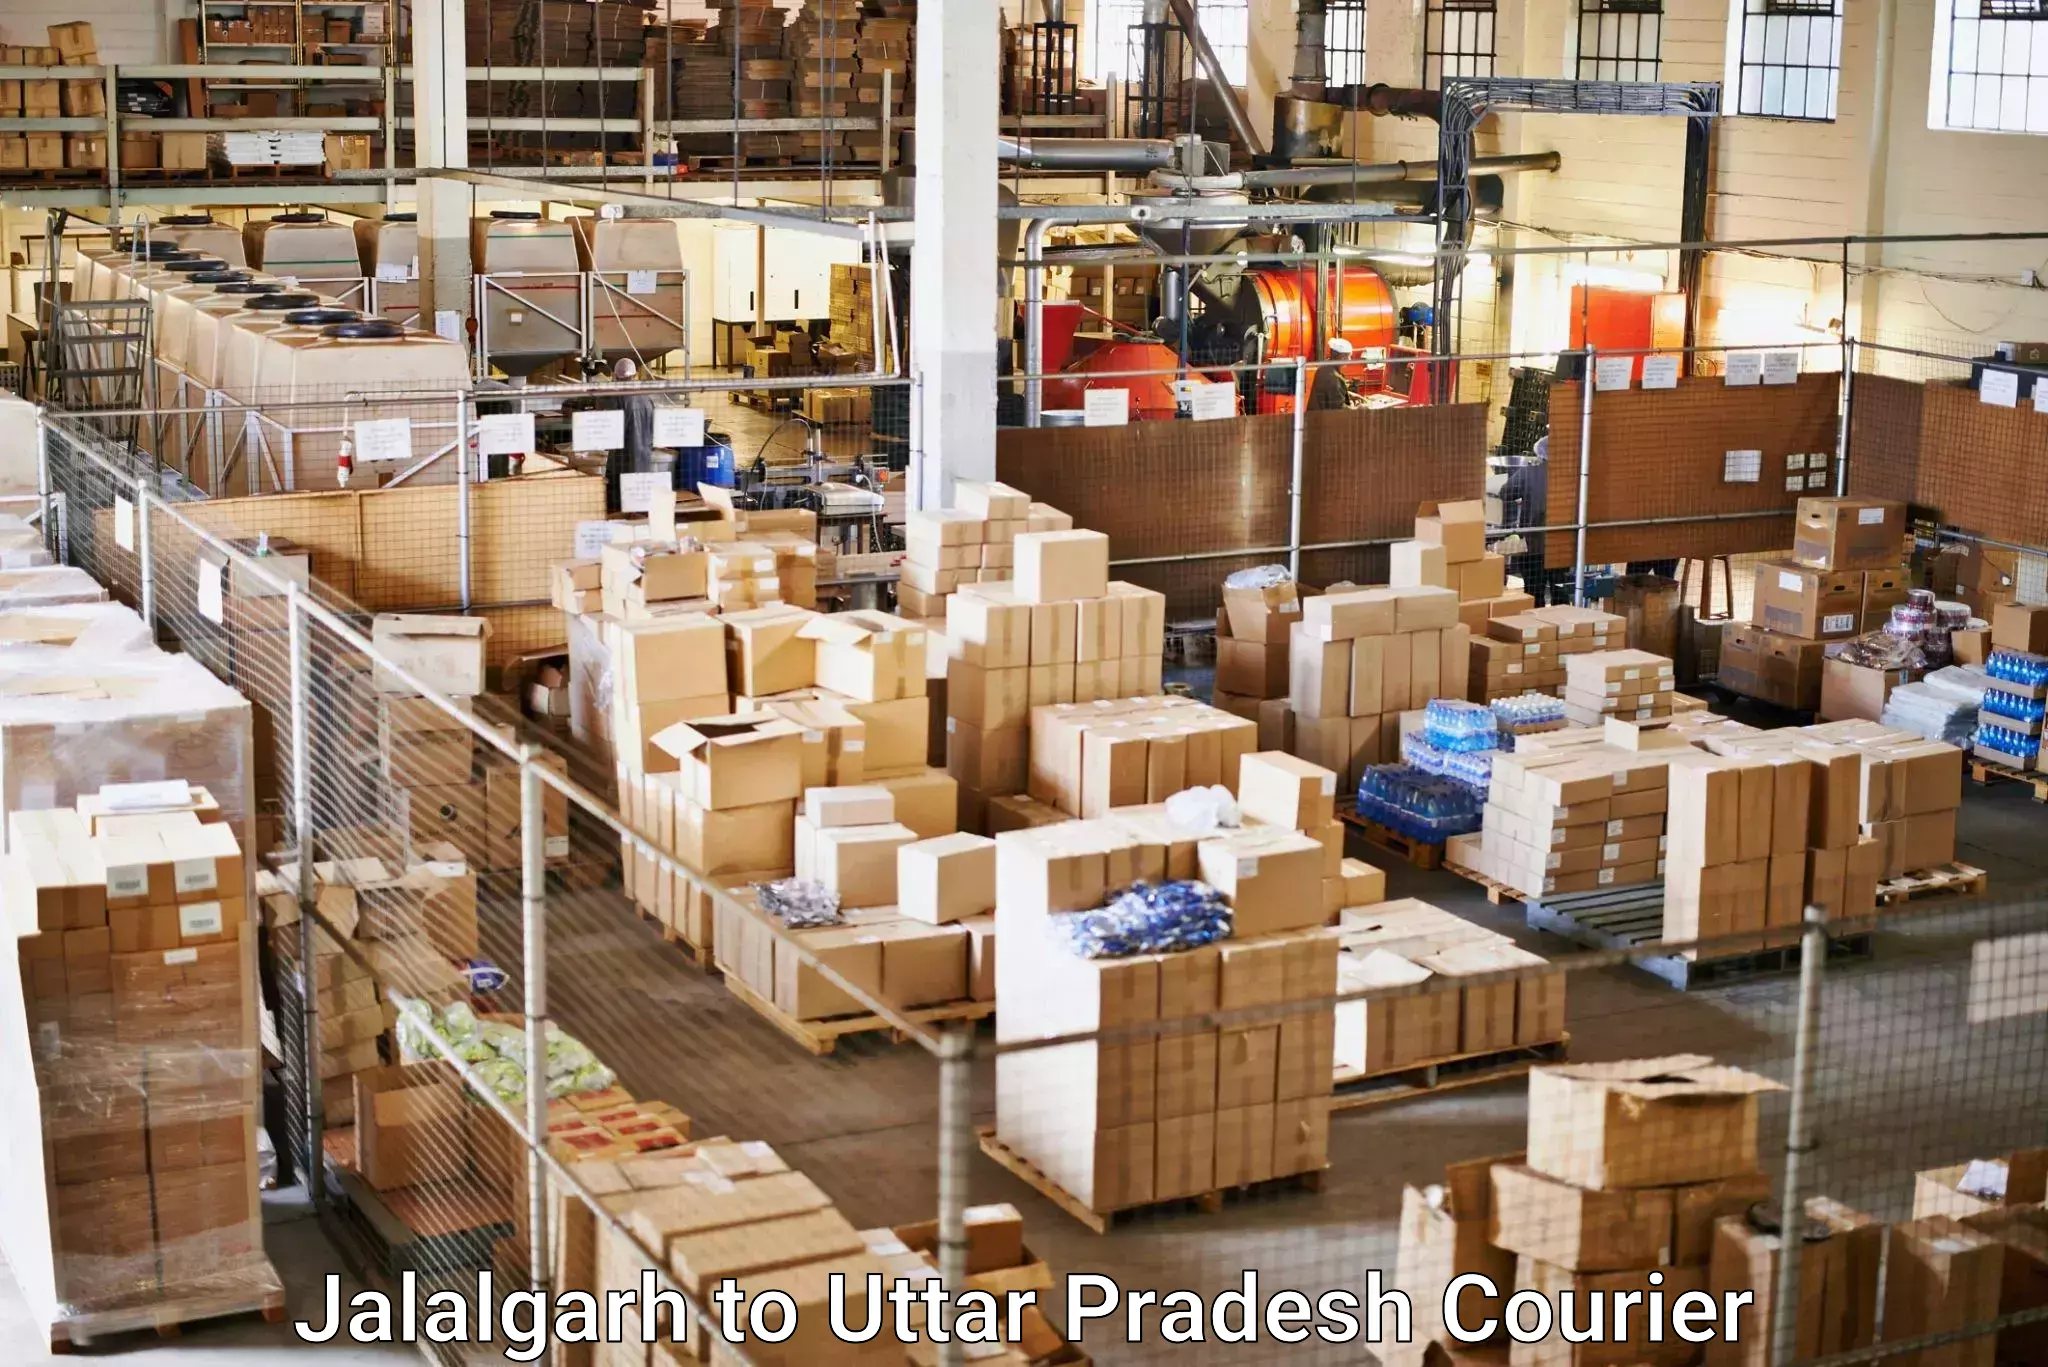 Efficient courier operations Jalalgarh to Azamgarh